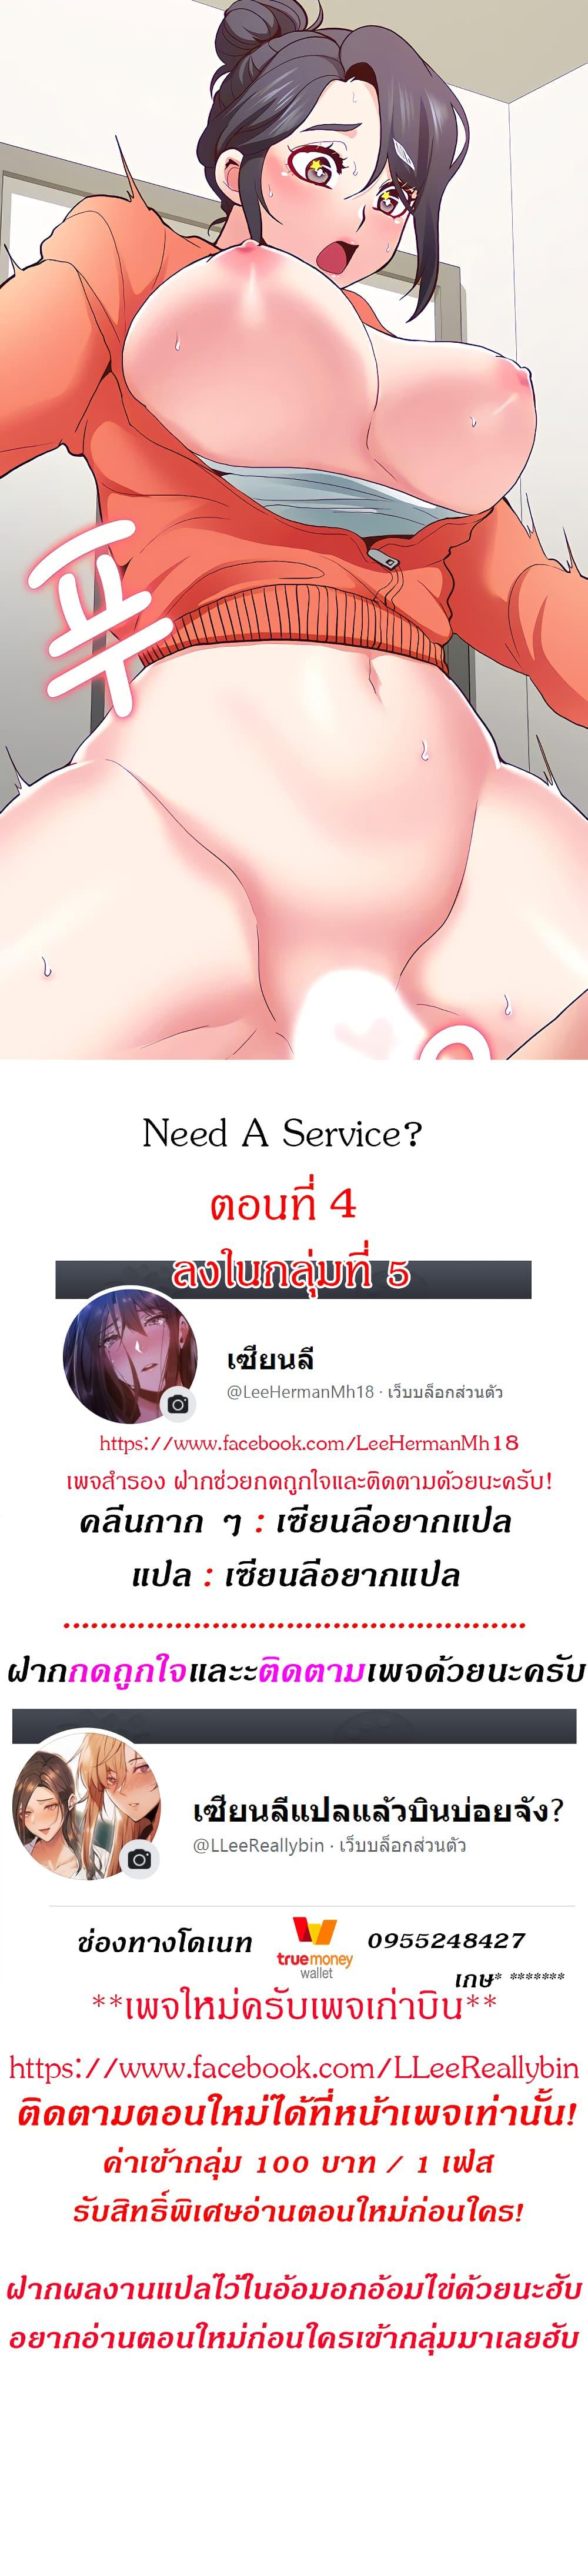 Need A Service? 4 ภาพ 0